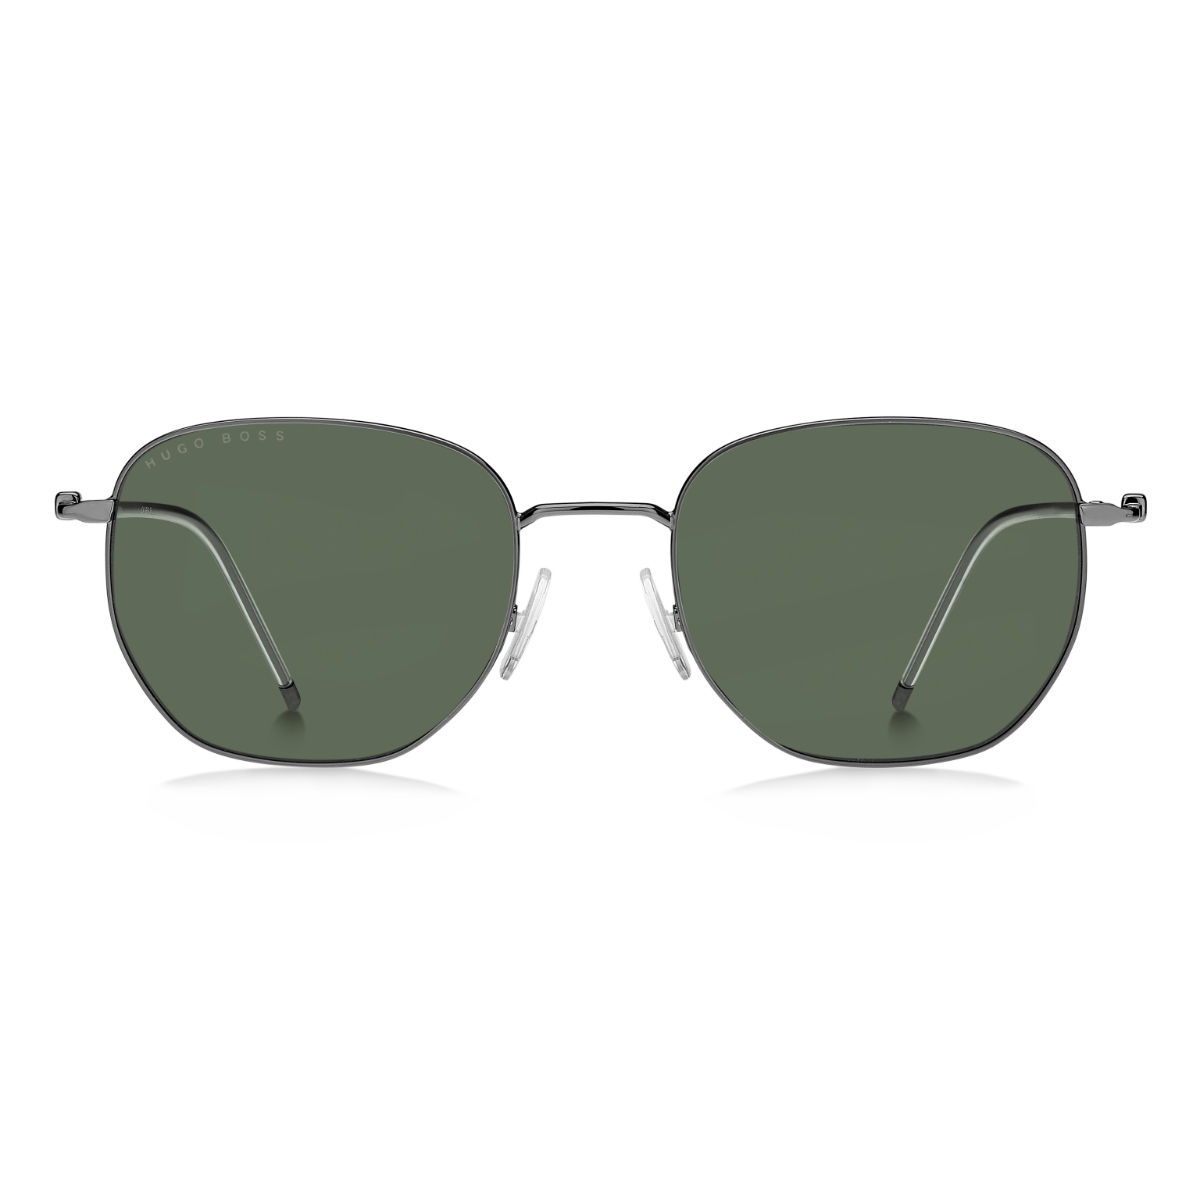 Buy Ray-Ban Ray-Ban Sunglasses | Arista Sunglasses ( 0Rb3714I | Irregular |  Gold Frame | Green Lens ) Sunglasses Online.